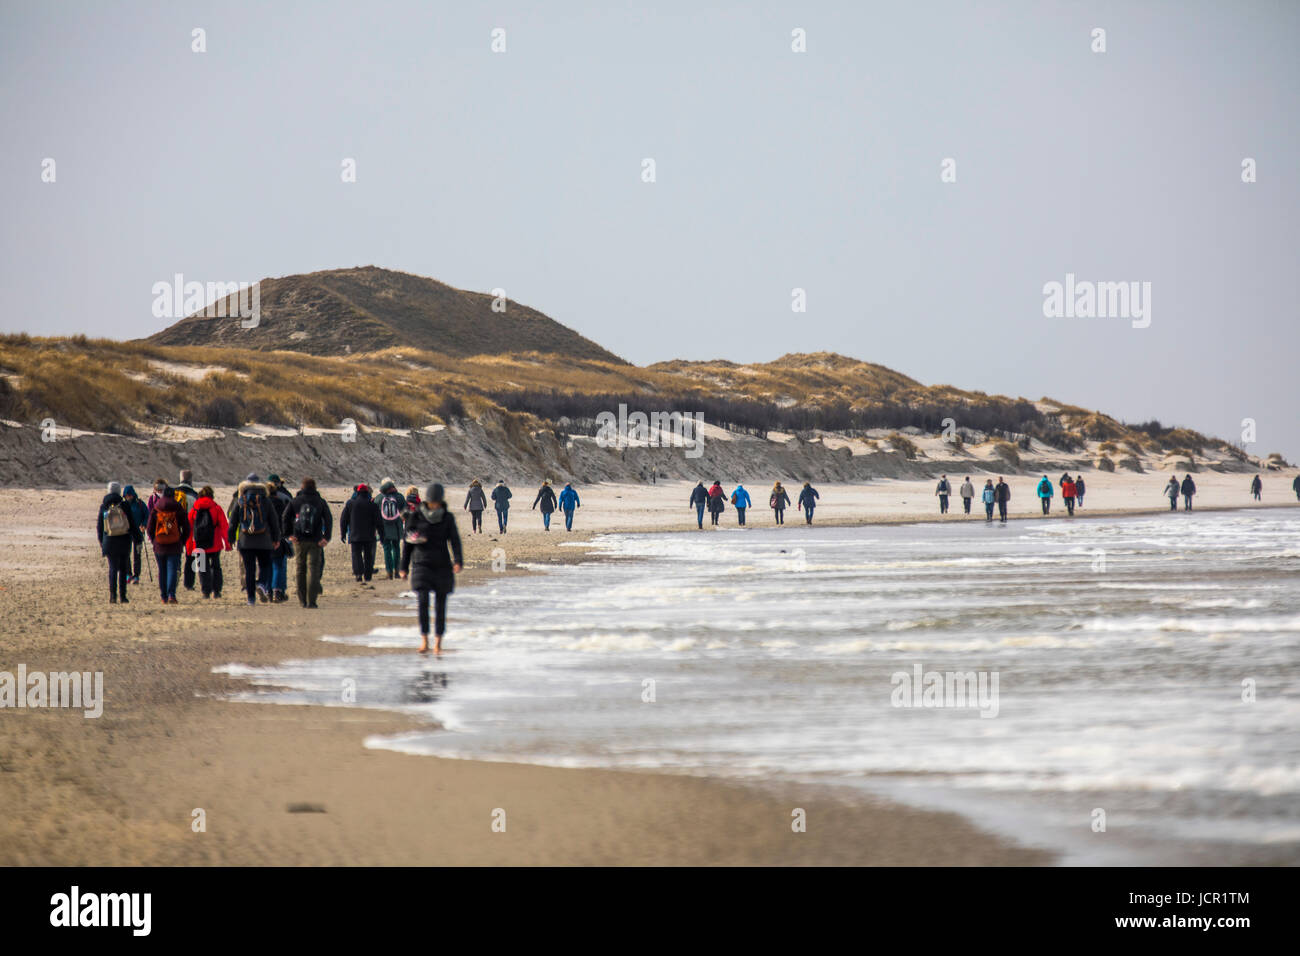 North Sea island, Norderney, East Frisia, Germany, Beach, Stock Photo